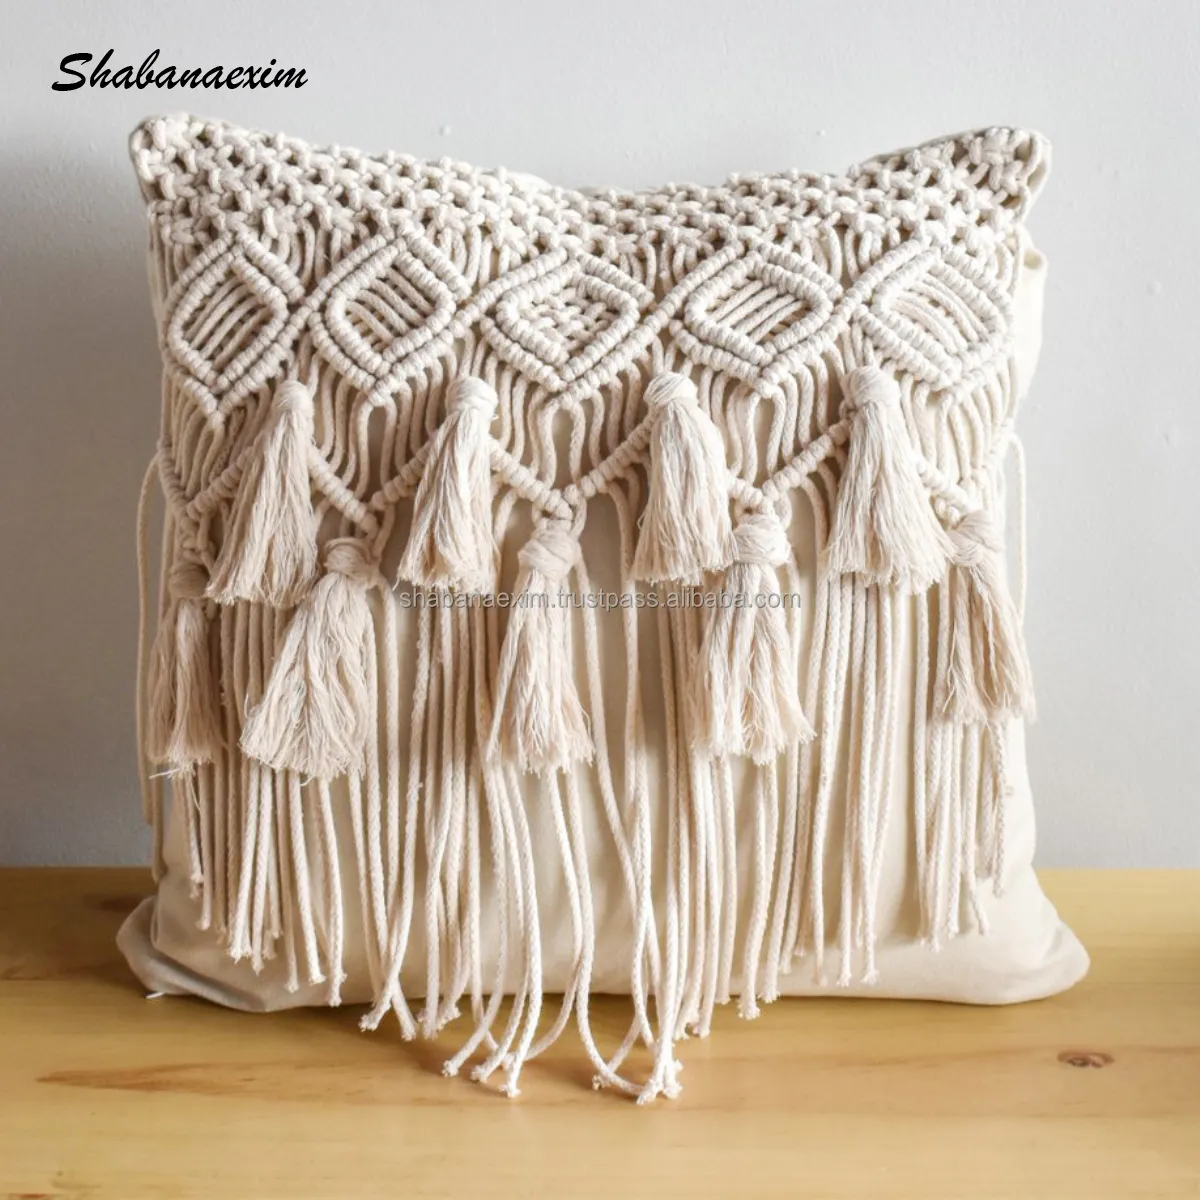 100% Cotton Rope Pillow Cover Tassel Macrame Hand Crochet Pillow Case Fabulous Design Decorative Cushion Cover